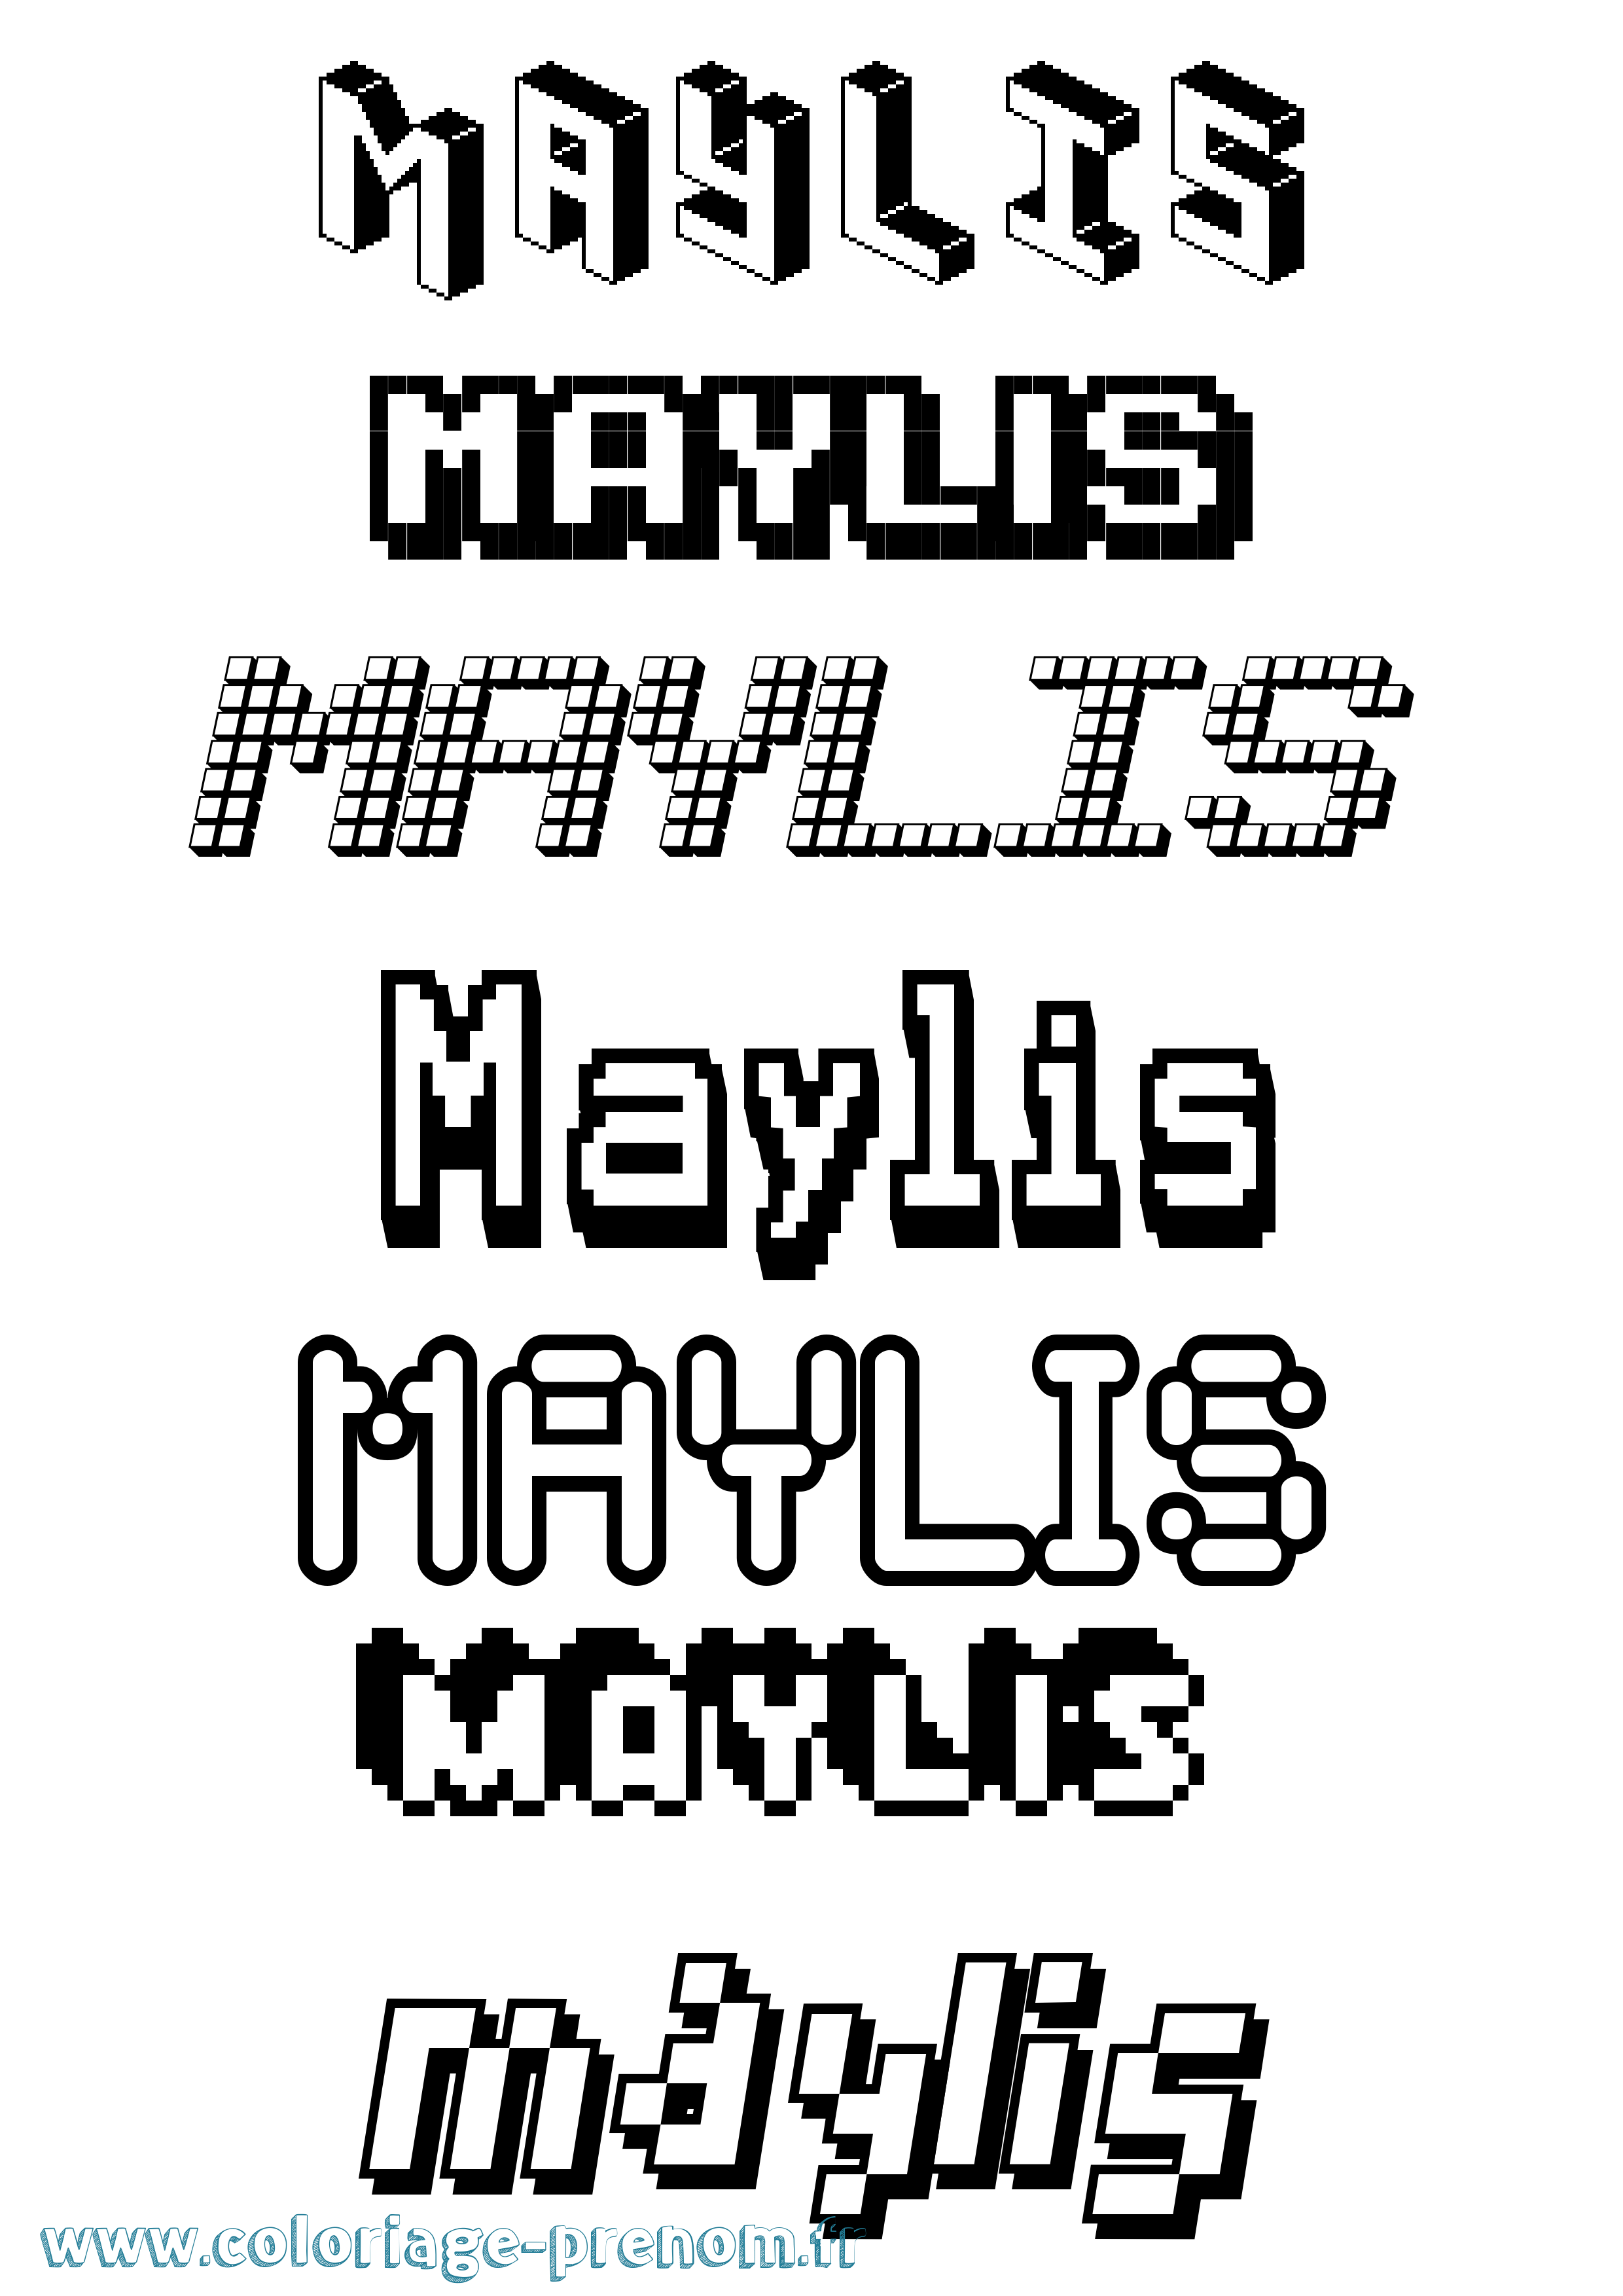 Coloriage prénom Maylis Pixel